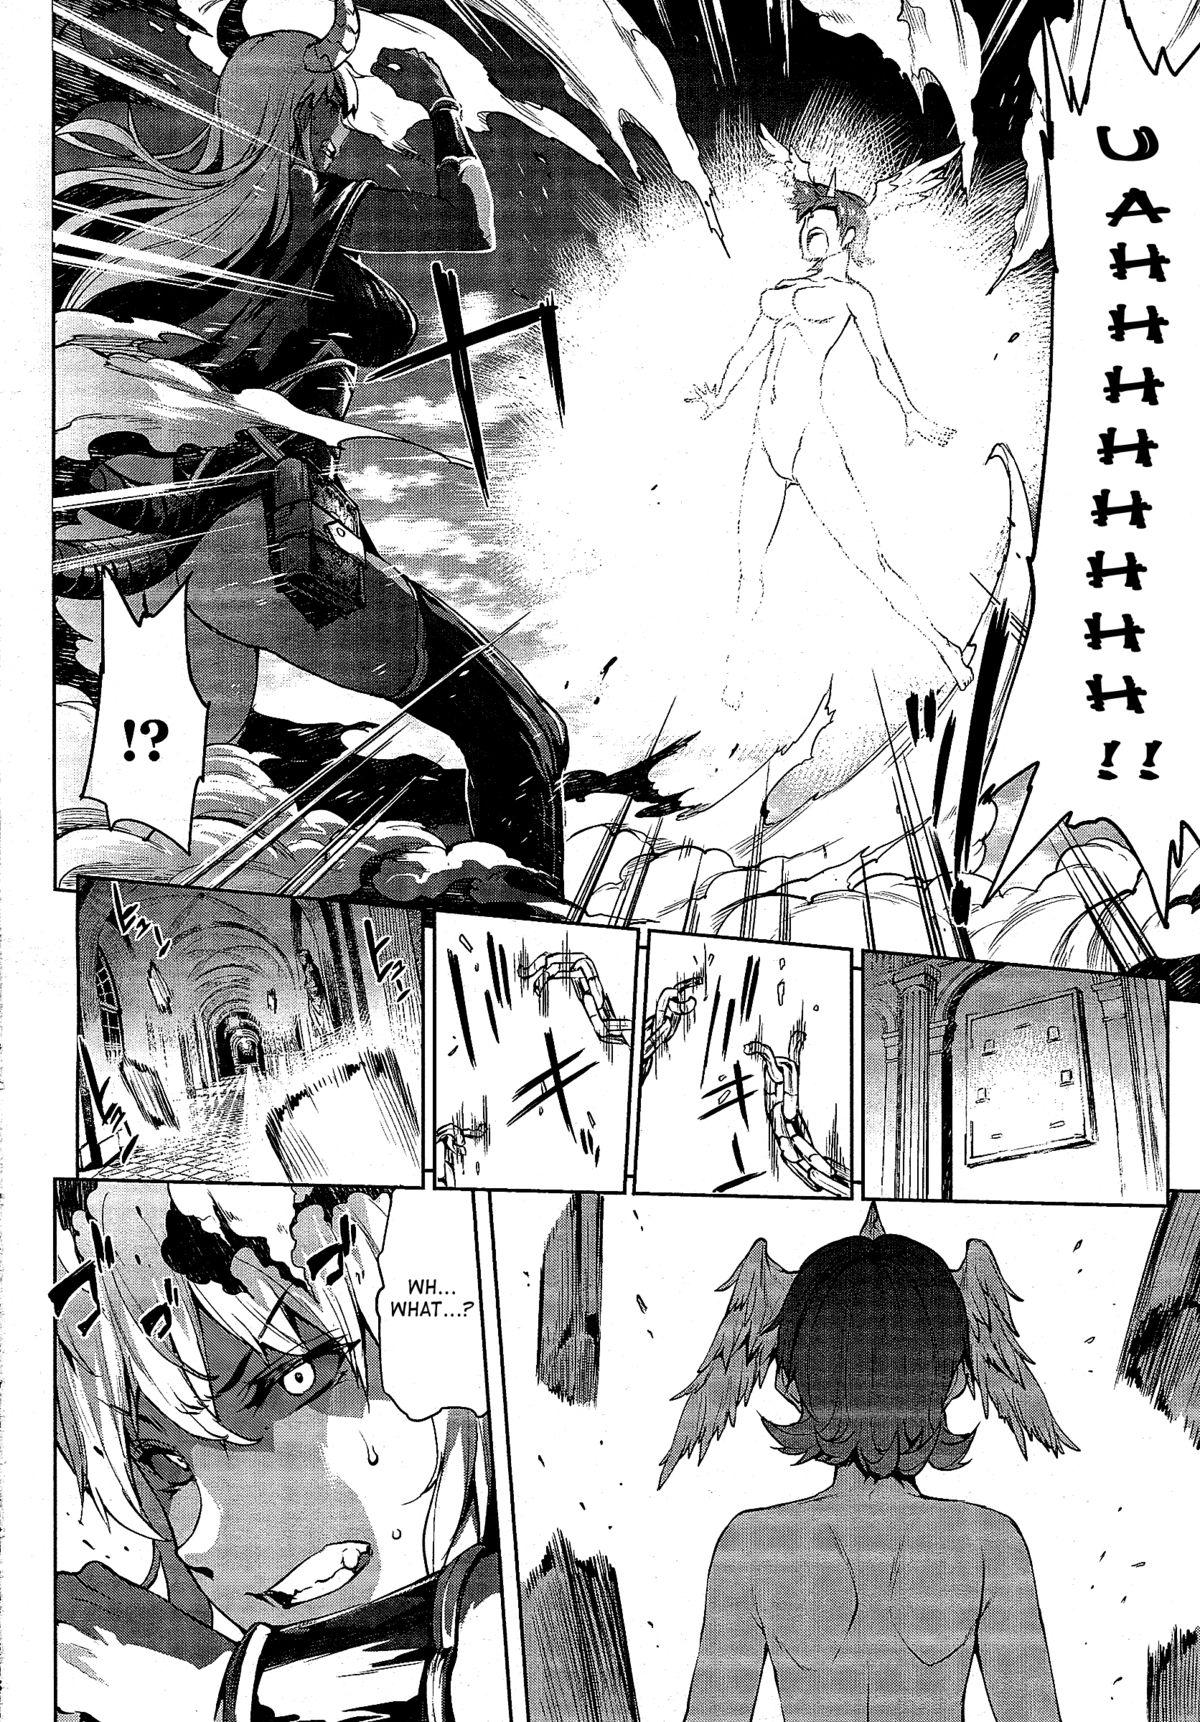 [Erect Sawaru] Shinkyoku no Grimoire -PANDRA saga 2nd story- Ch. 1-19 + Side Story x 3 [English] [SaHa] 451